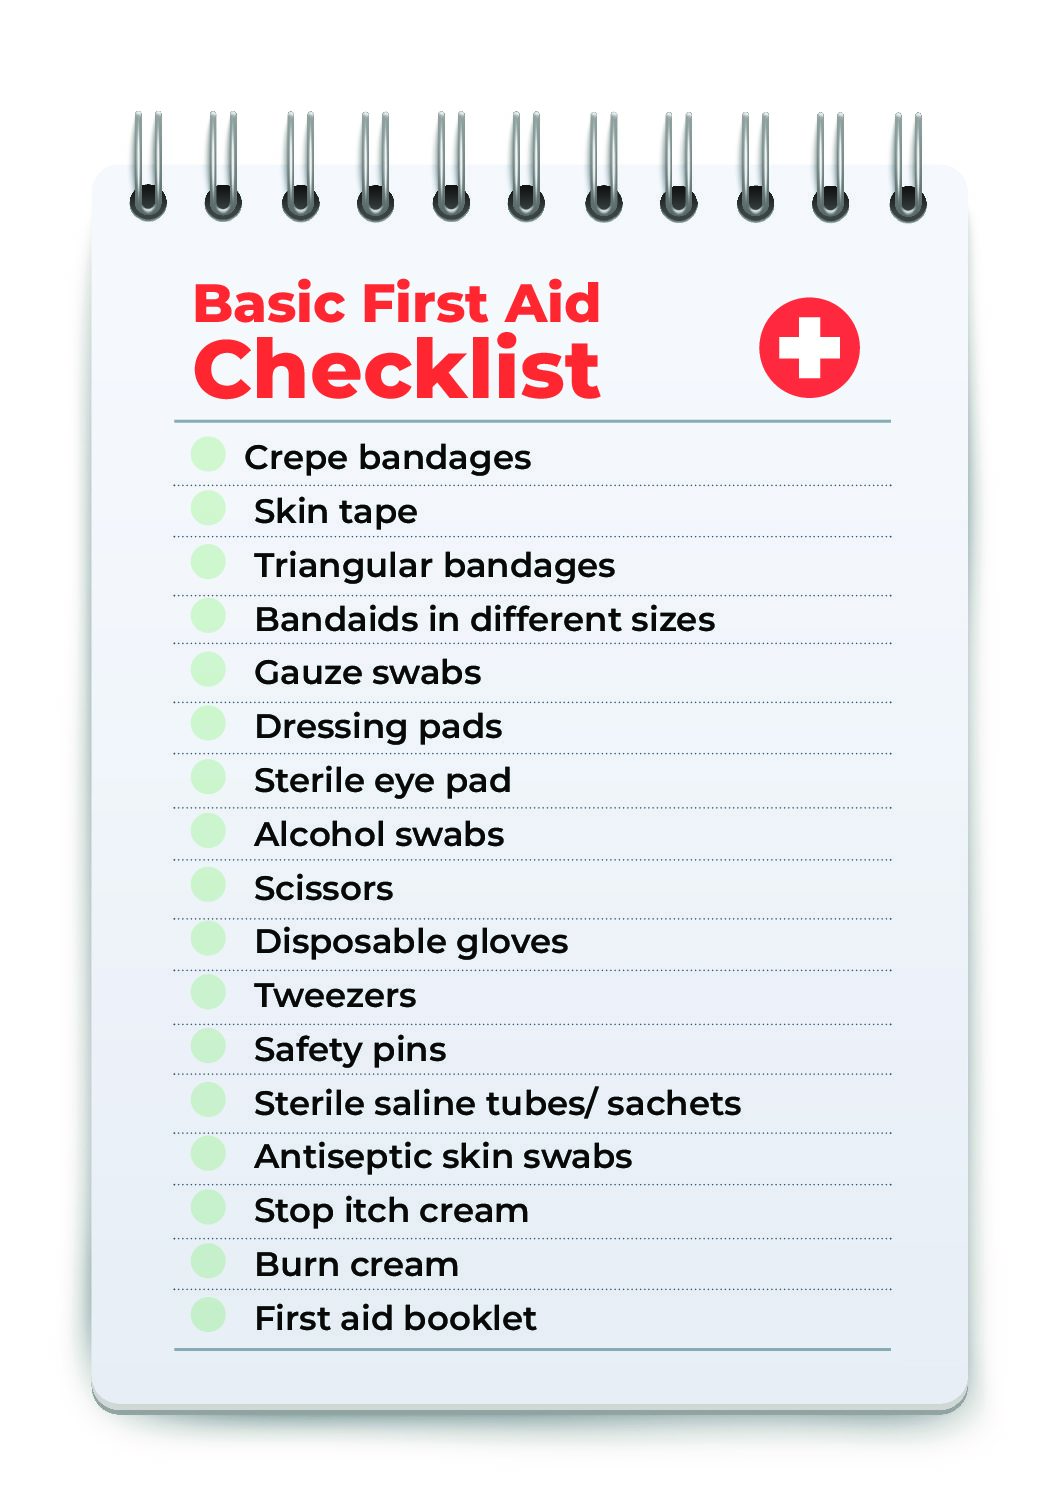 Basic First Aid Checklist - EasyClinic